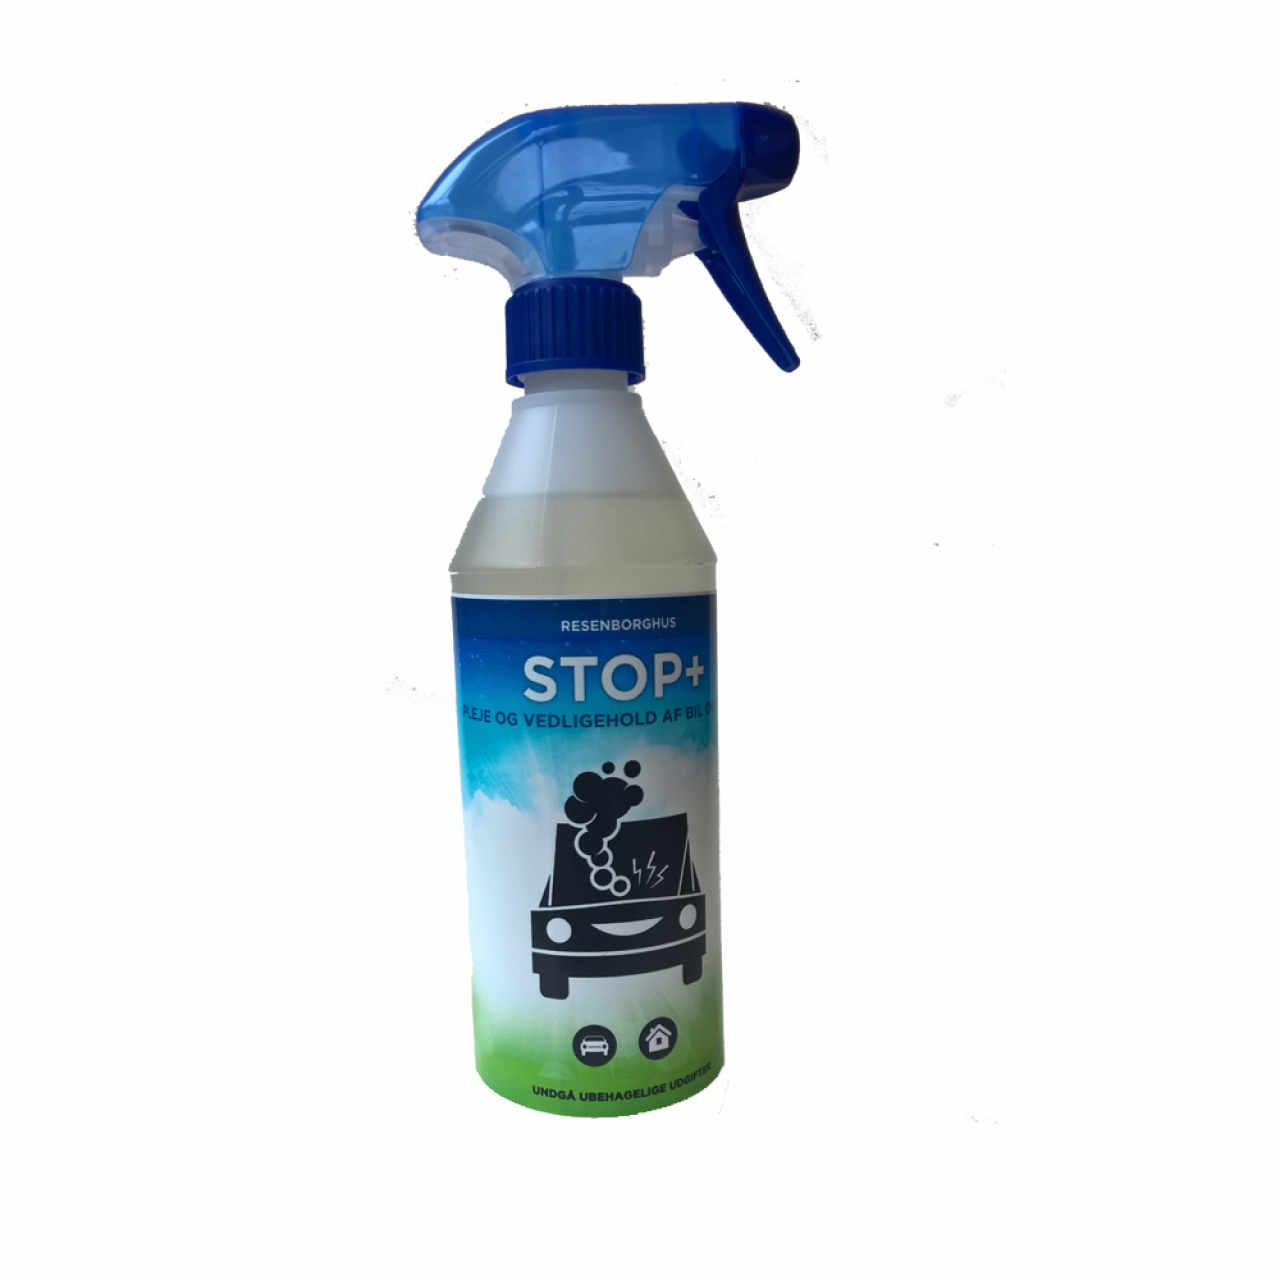 Stop+ Resenborghus nyestriasztó spray - 0,5 liter